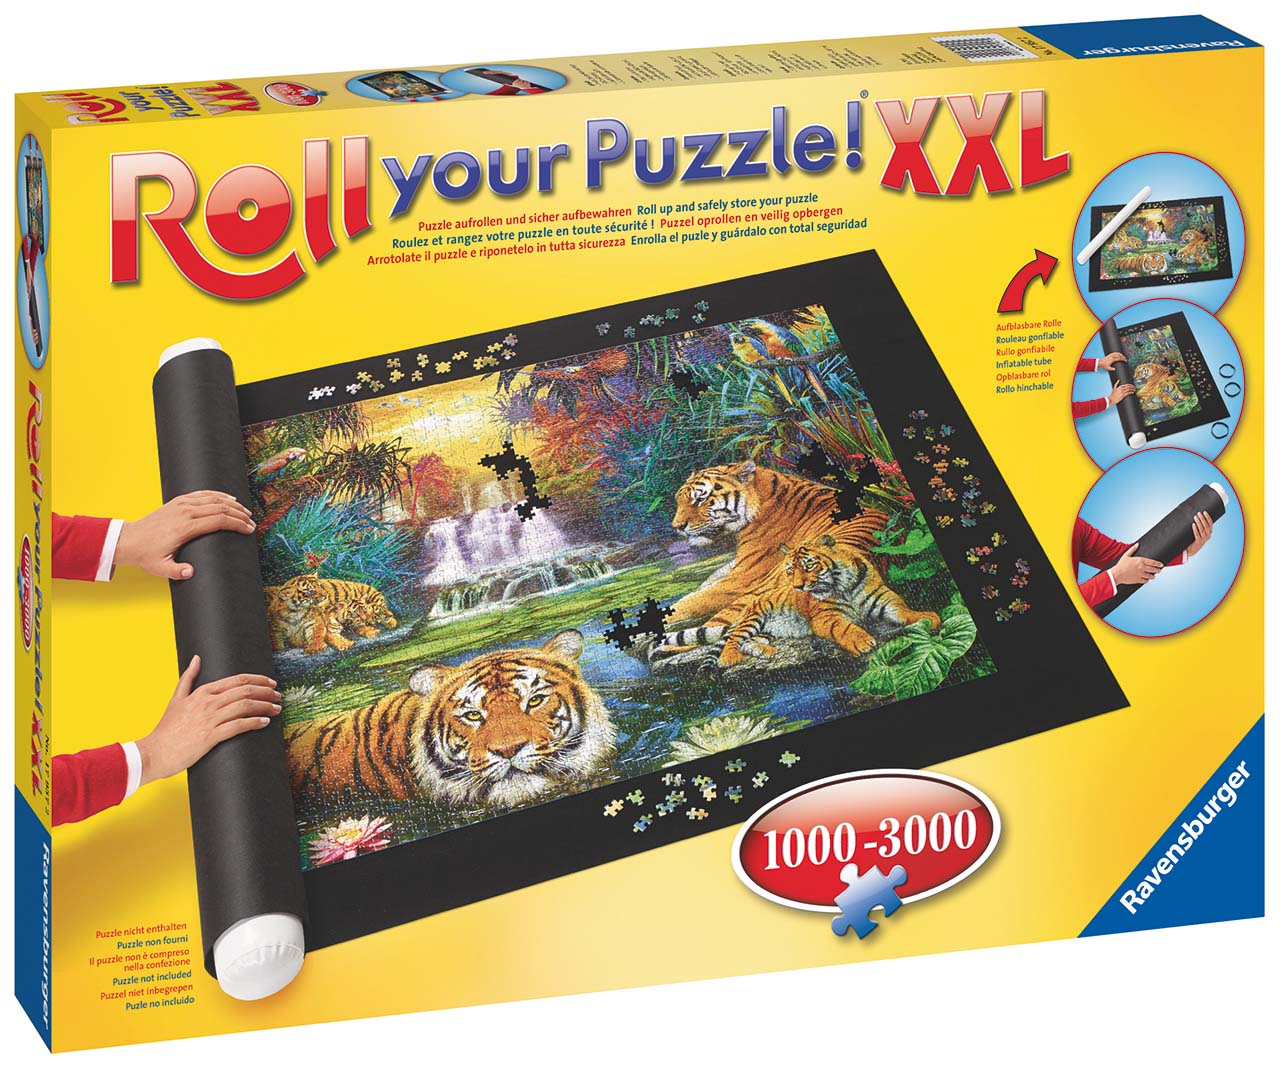 Zroluj si svoje Puzzle! XXL 1000-3000 dielkov